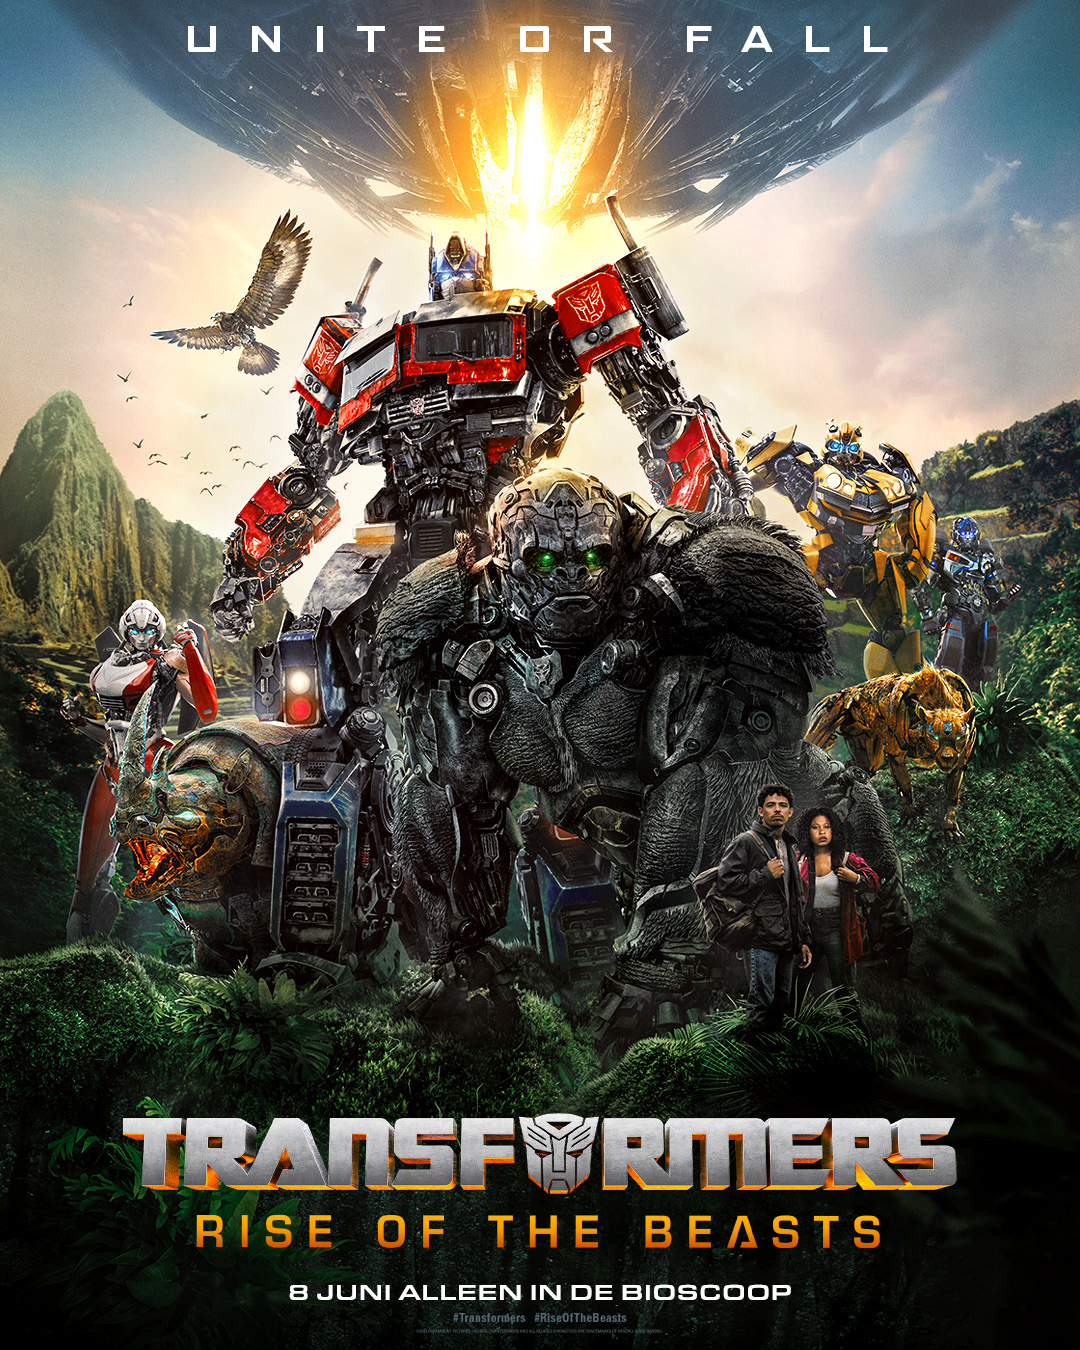 Transformers Rise of the Beasts bioscoop kaarten winnen